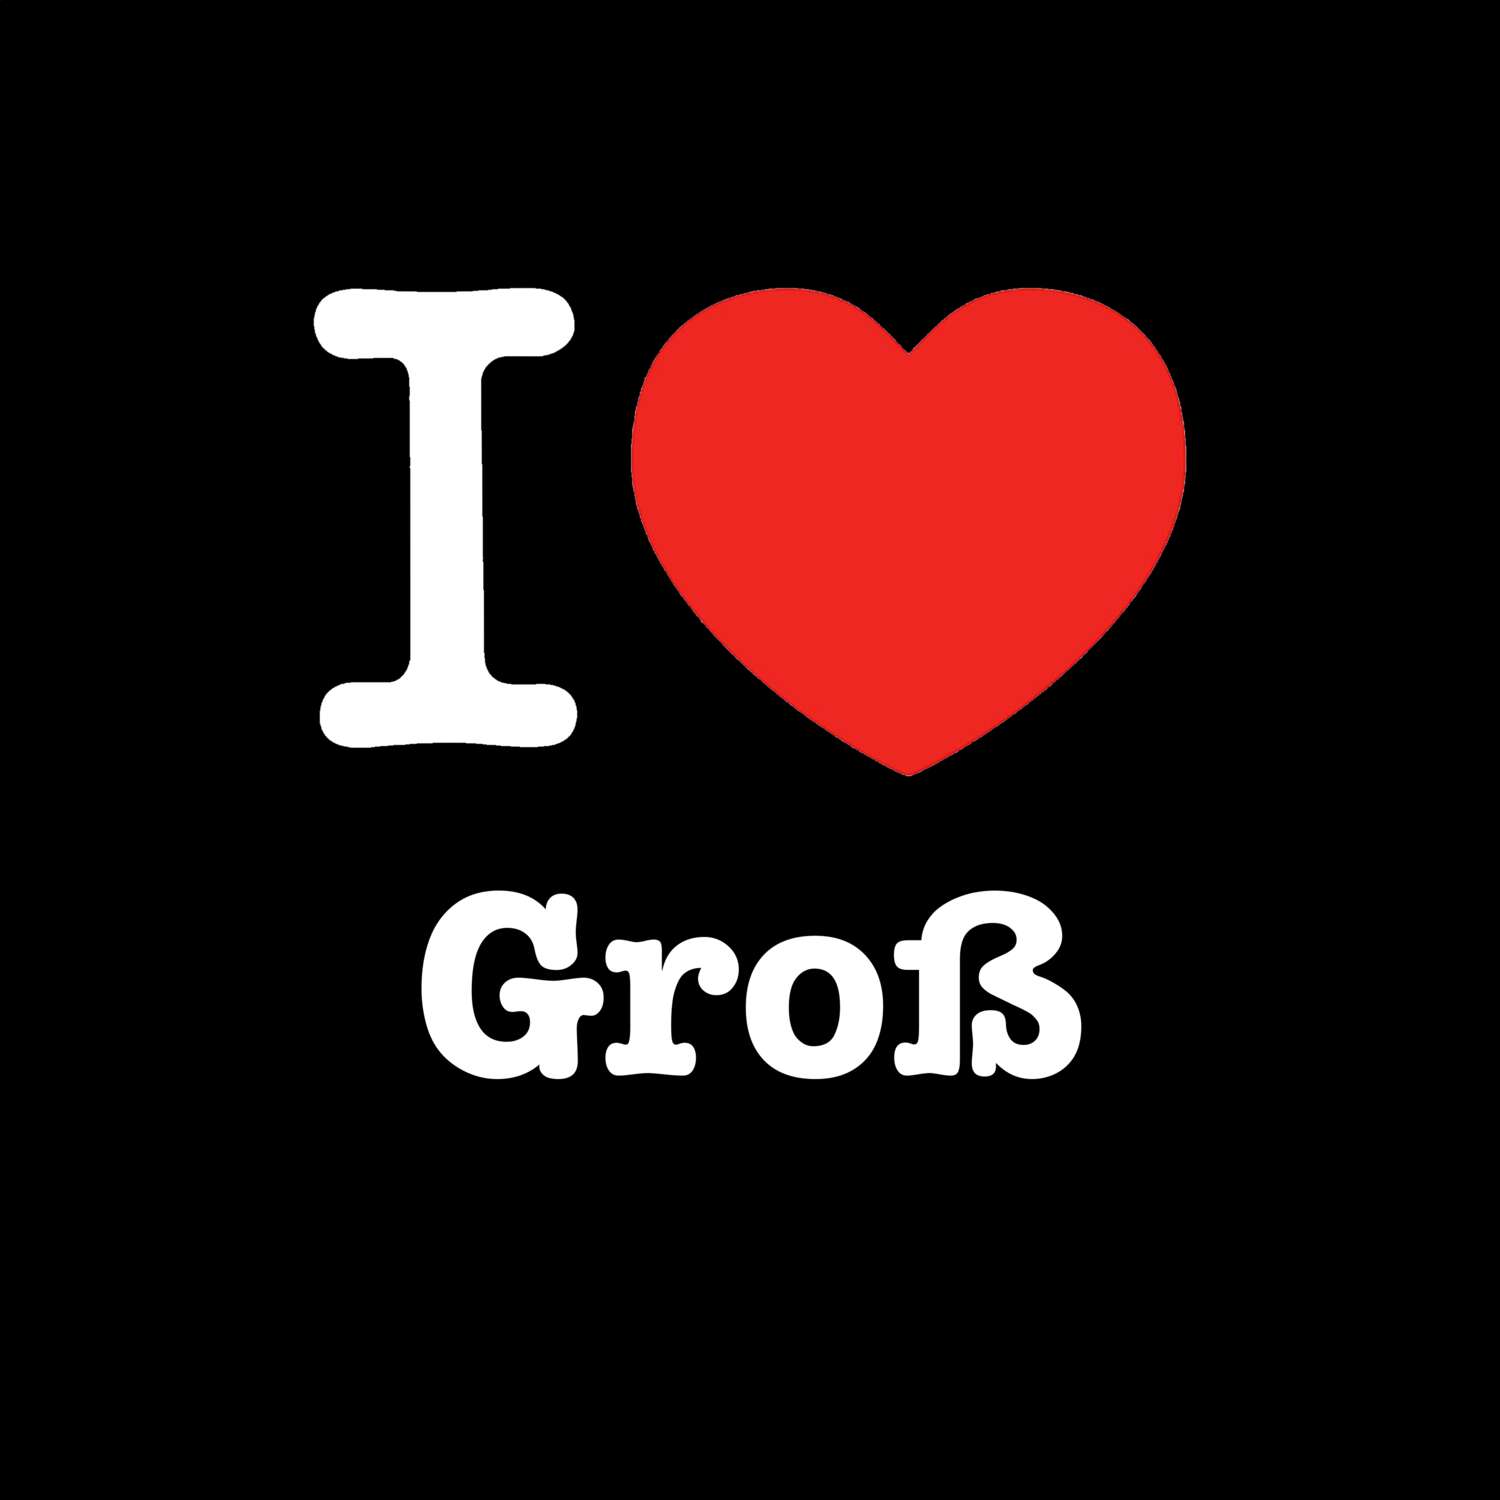 Groß T-Shirt »I love«